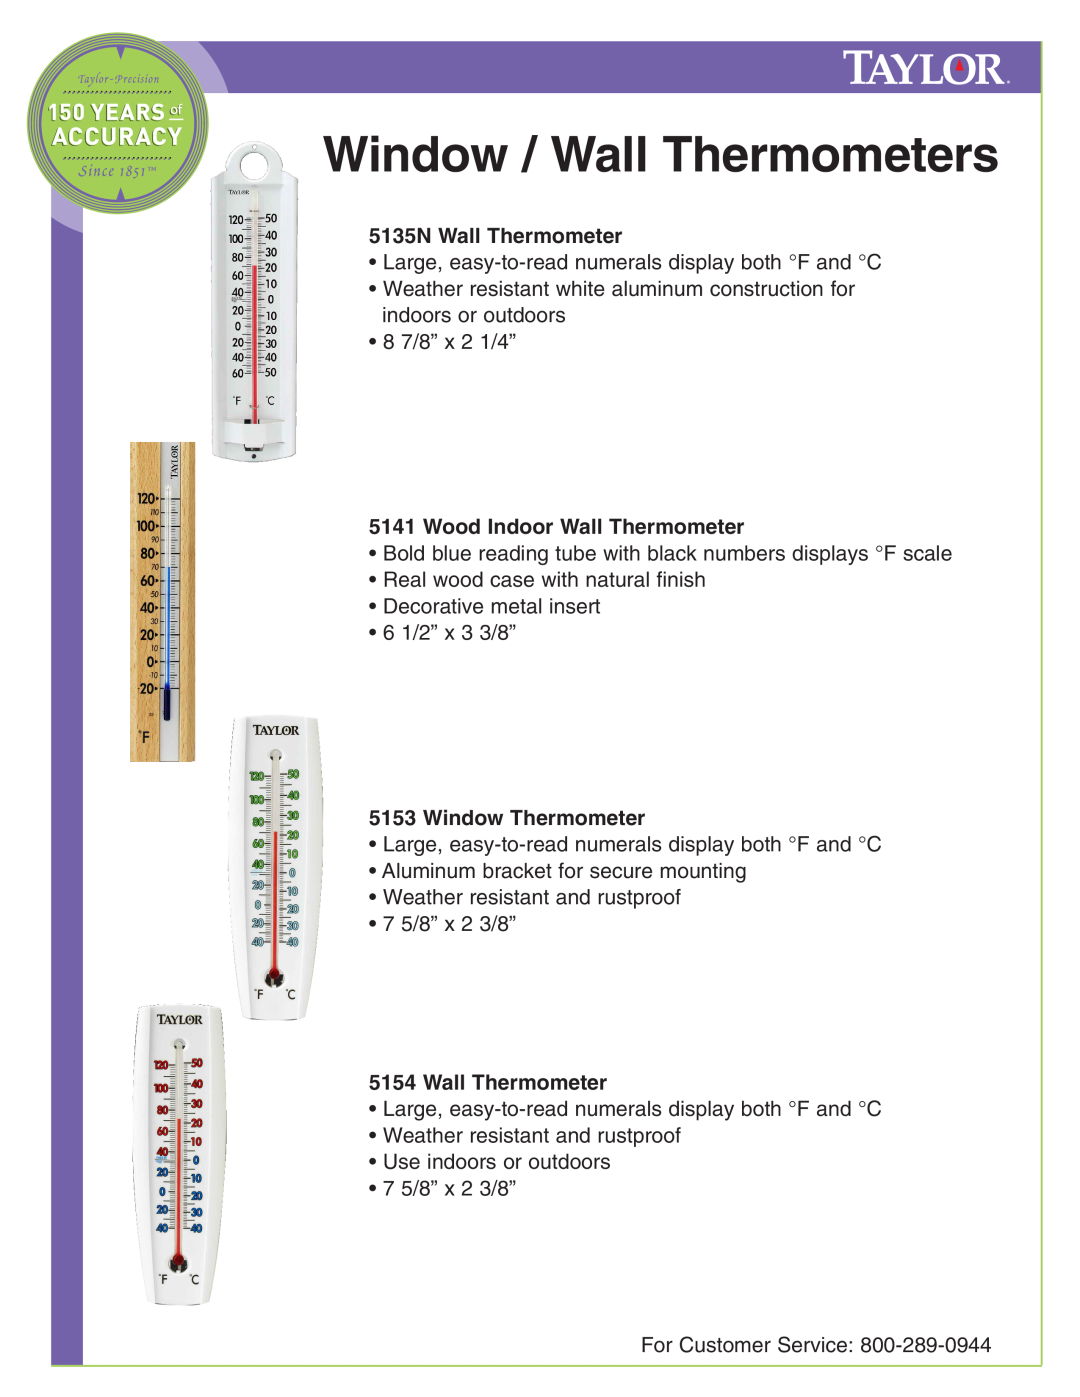 Taylor 5132N, 5535N 5135N Wall Thermometer, Wood Indoor Wall Thermometer, Window Thermometer, Window / Wall Thermometers 